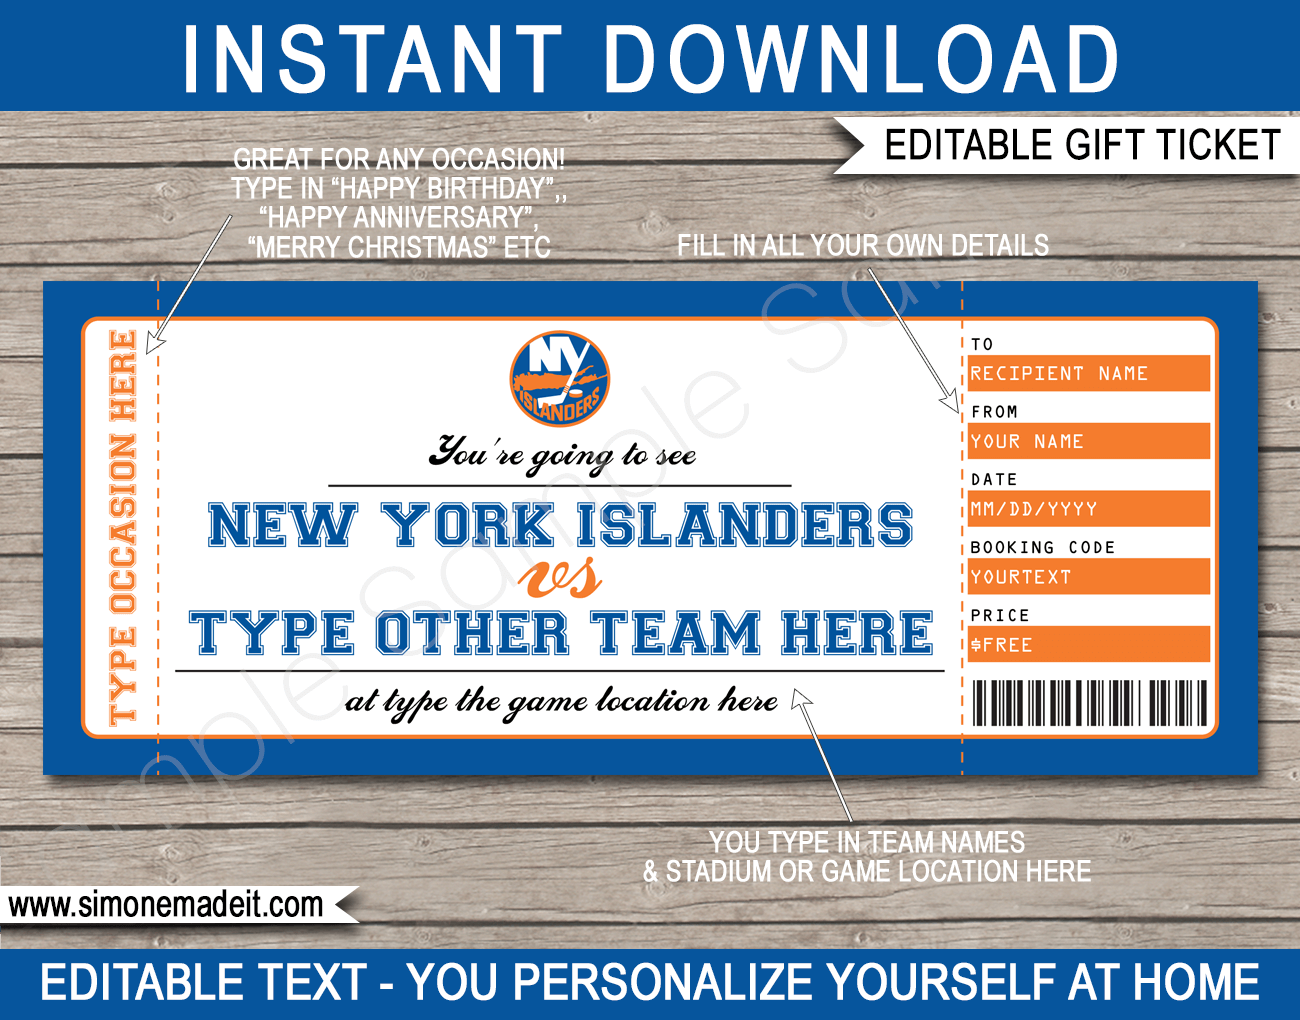 nhl islanders tickets